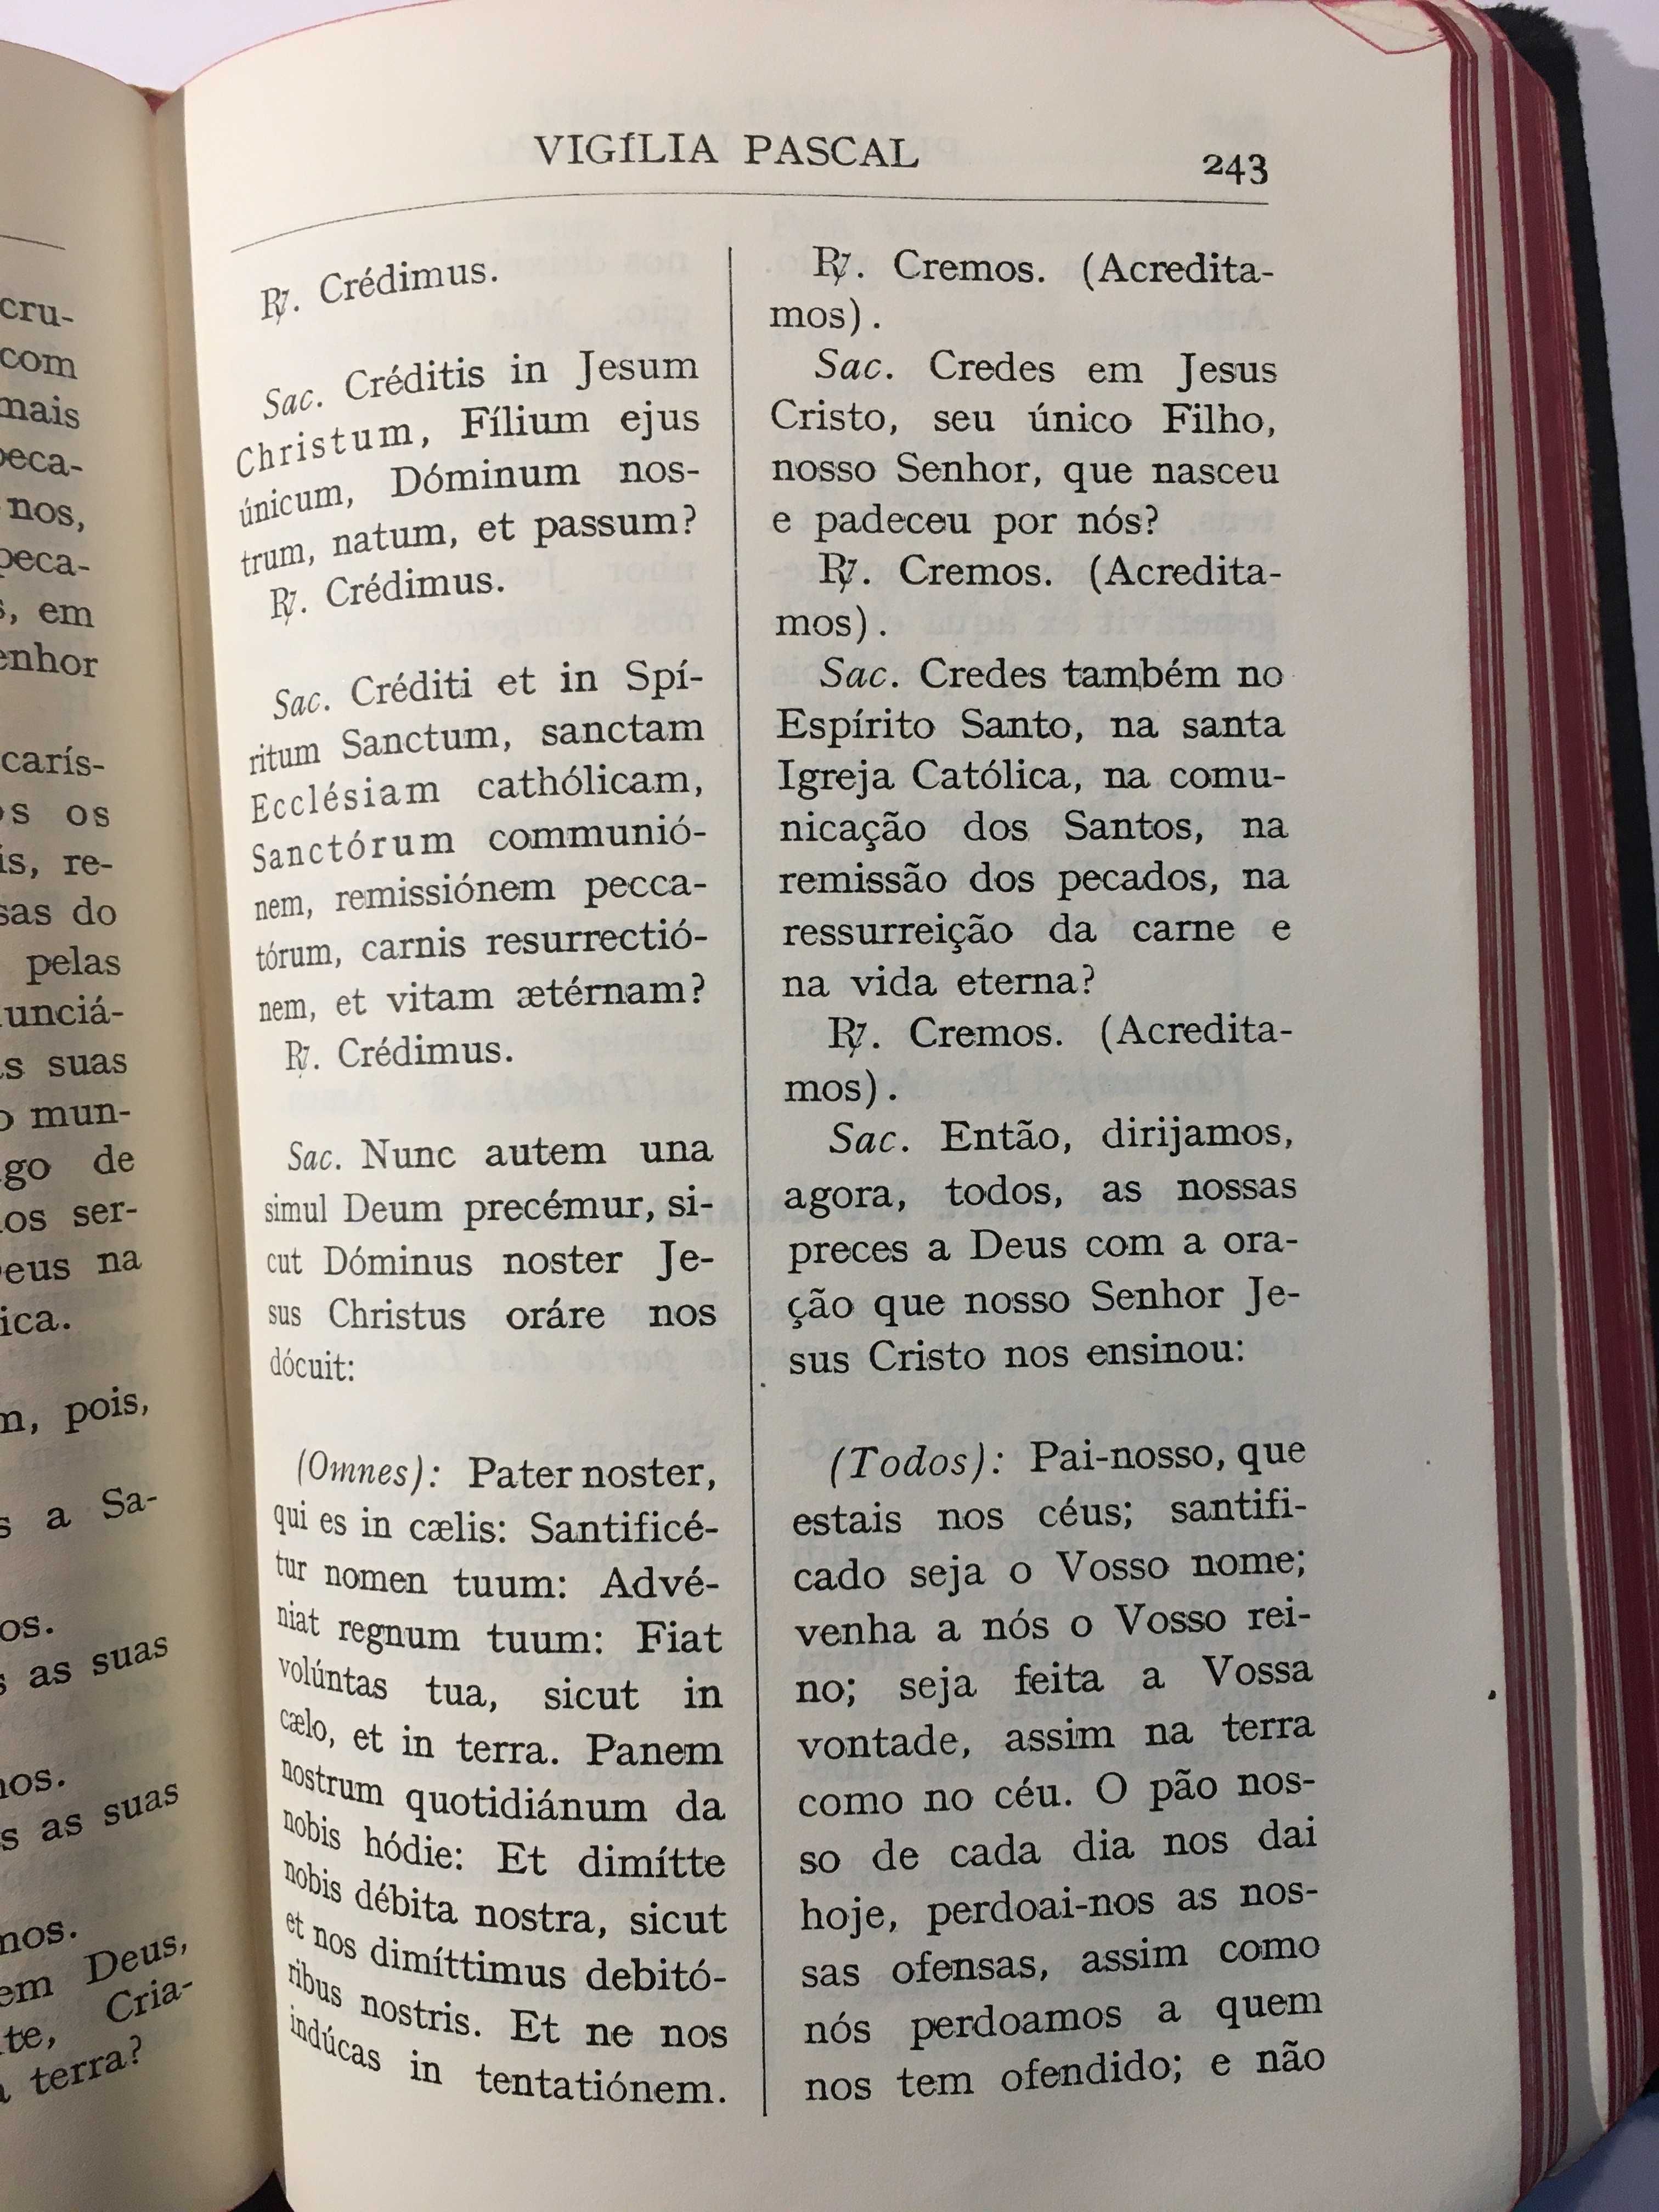 Missal Romano dos Domingos e Festas 1956 Freitas Barros